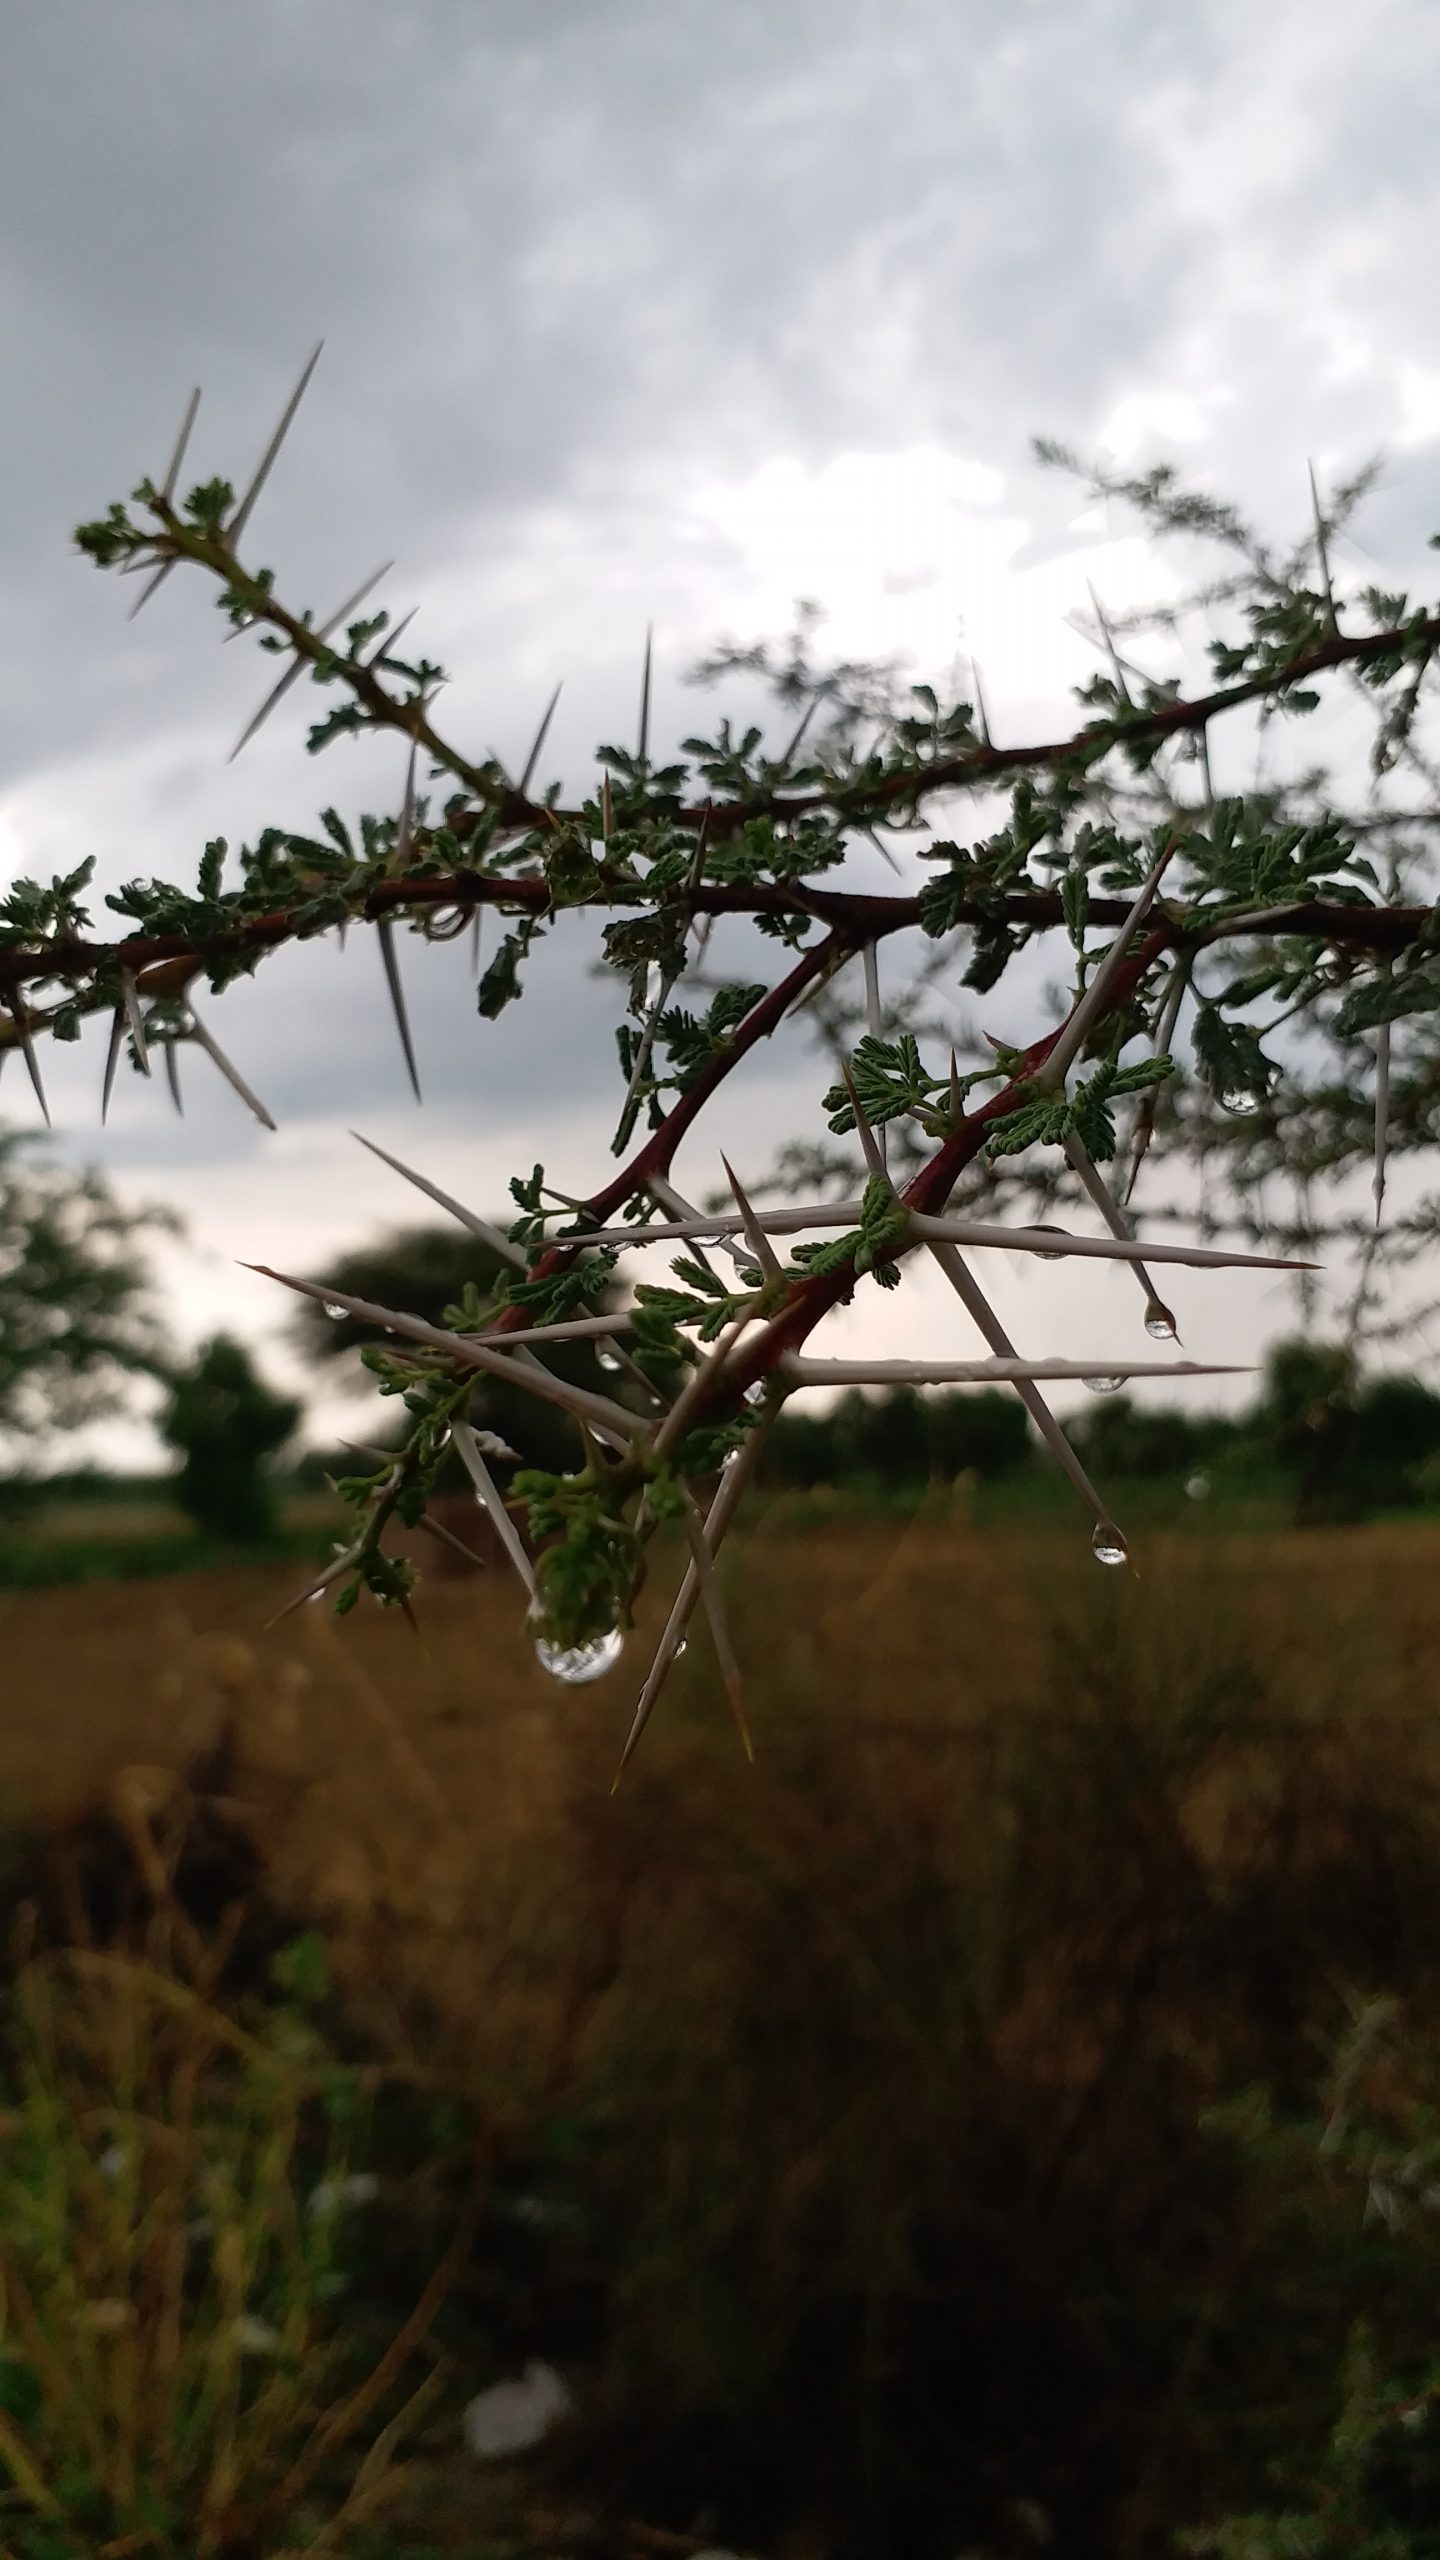 Rain drops on a thorny plant